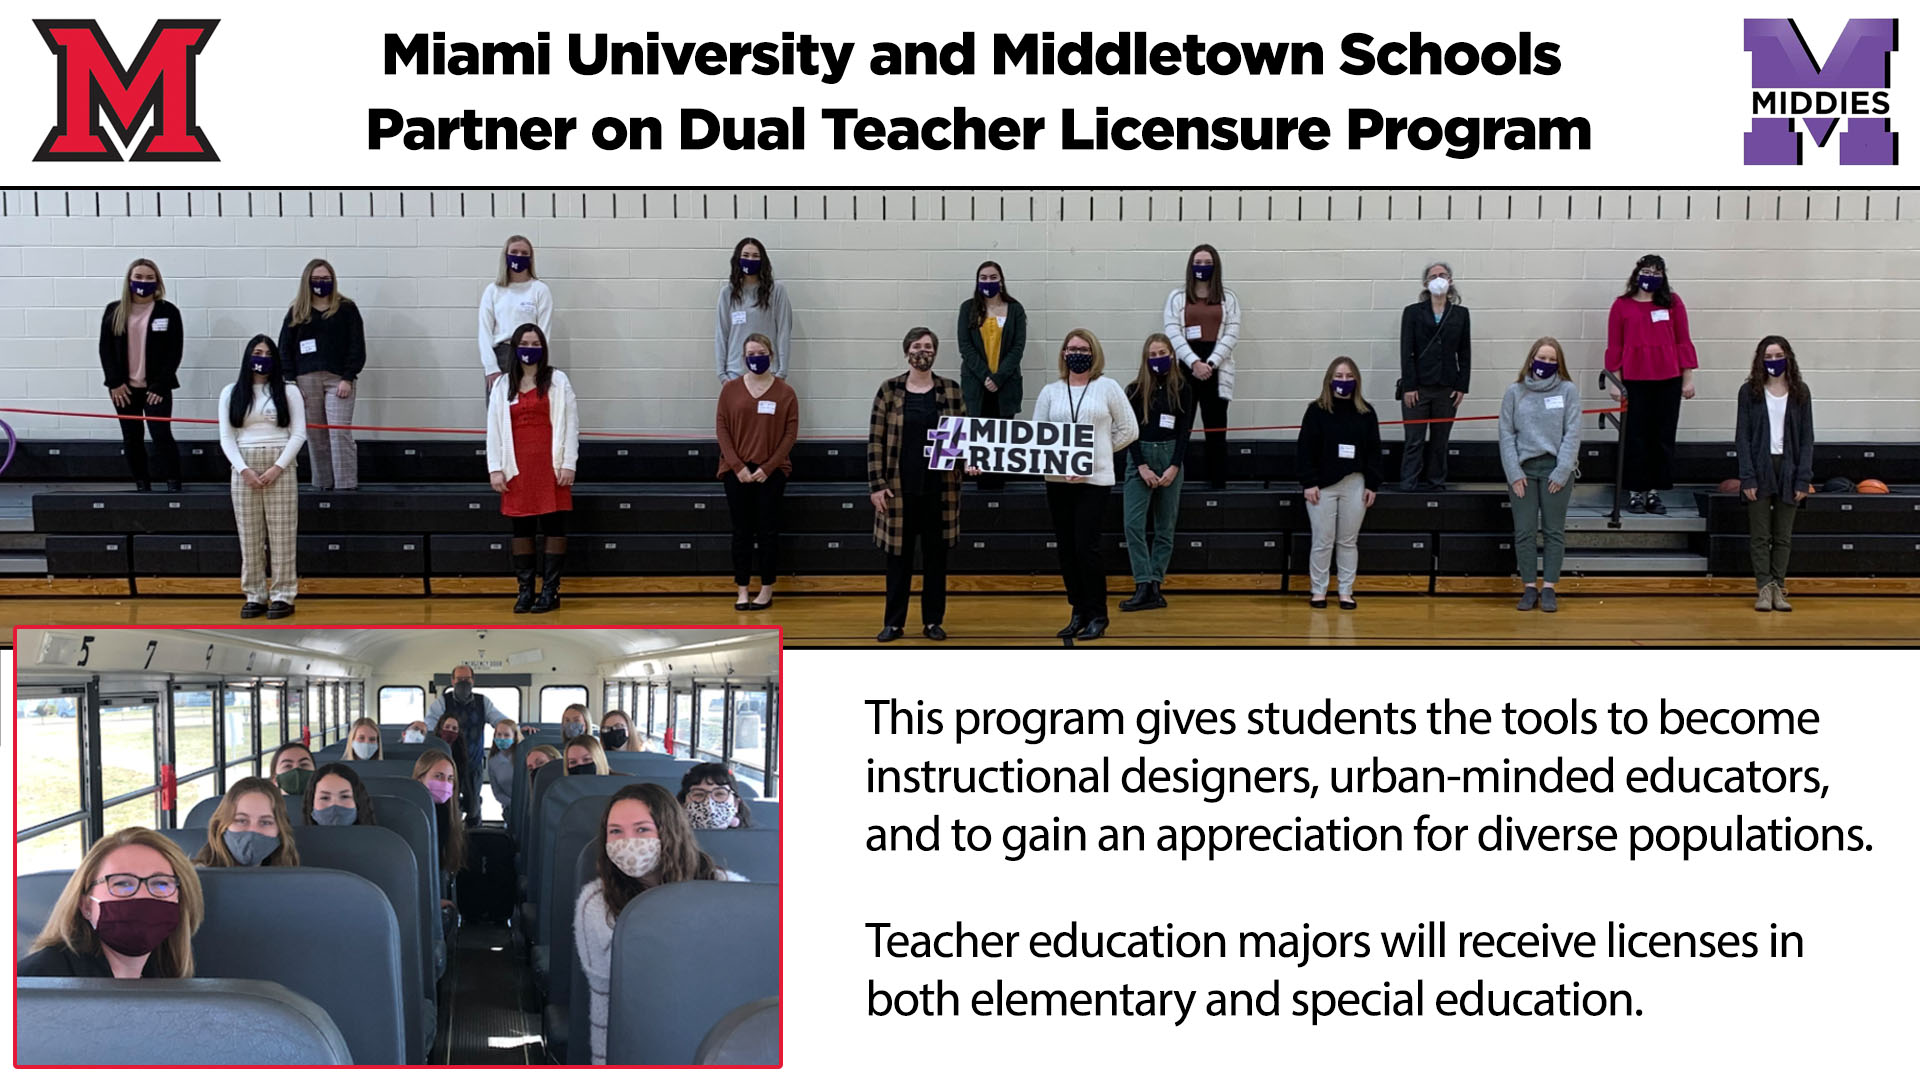 Miami University and Middletown Schools partner on dual teacher licensure program